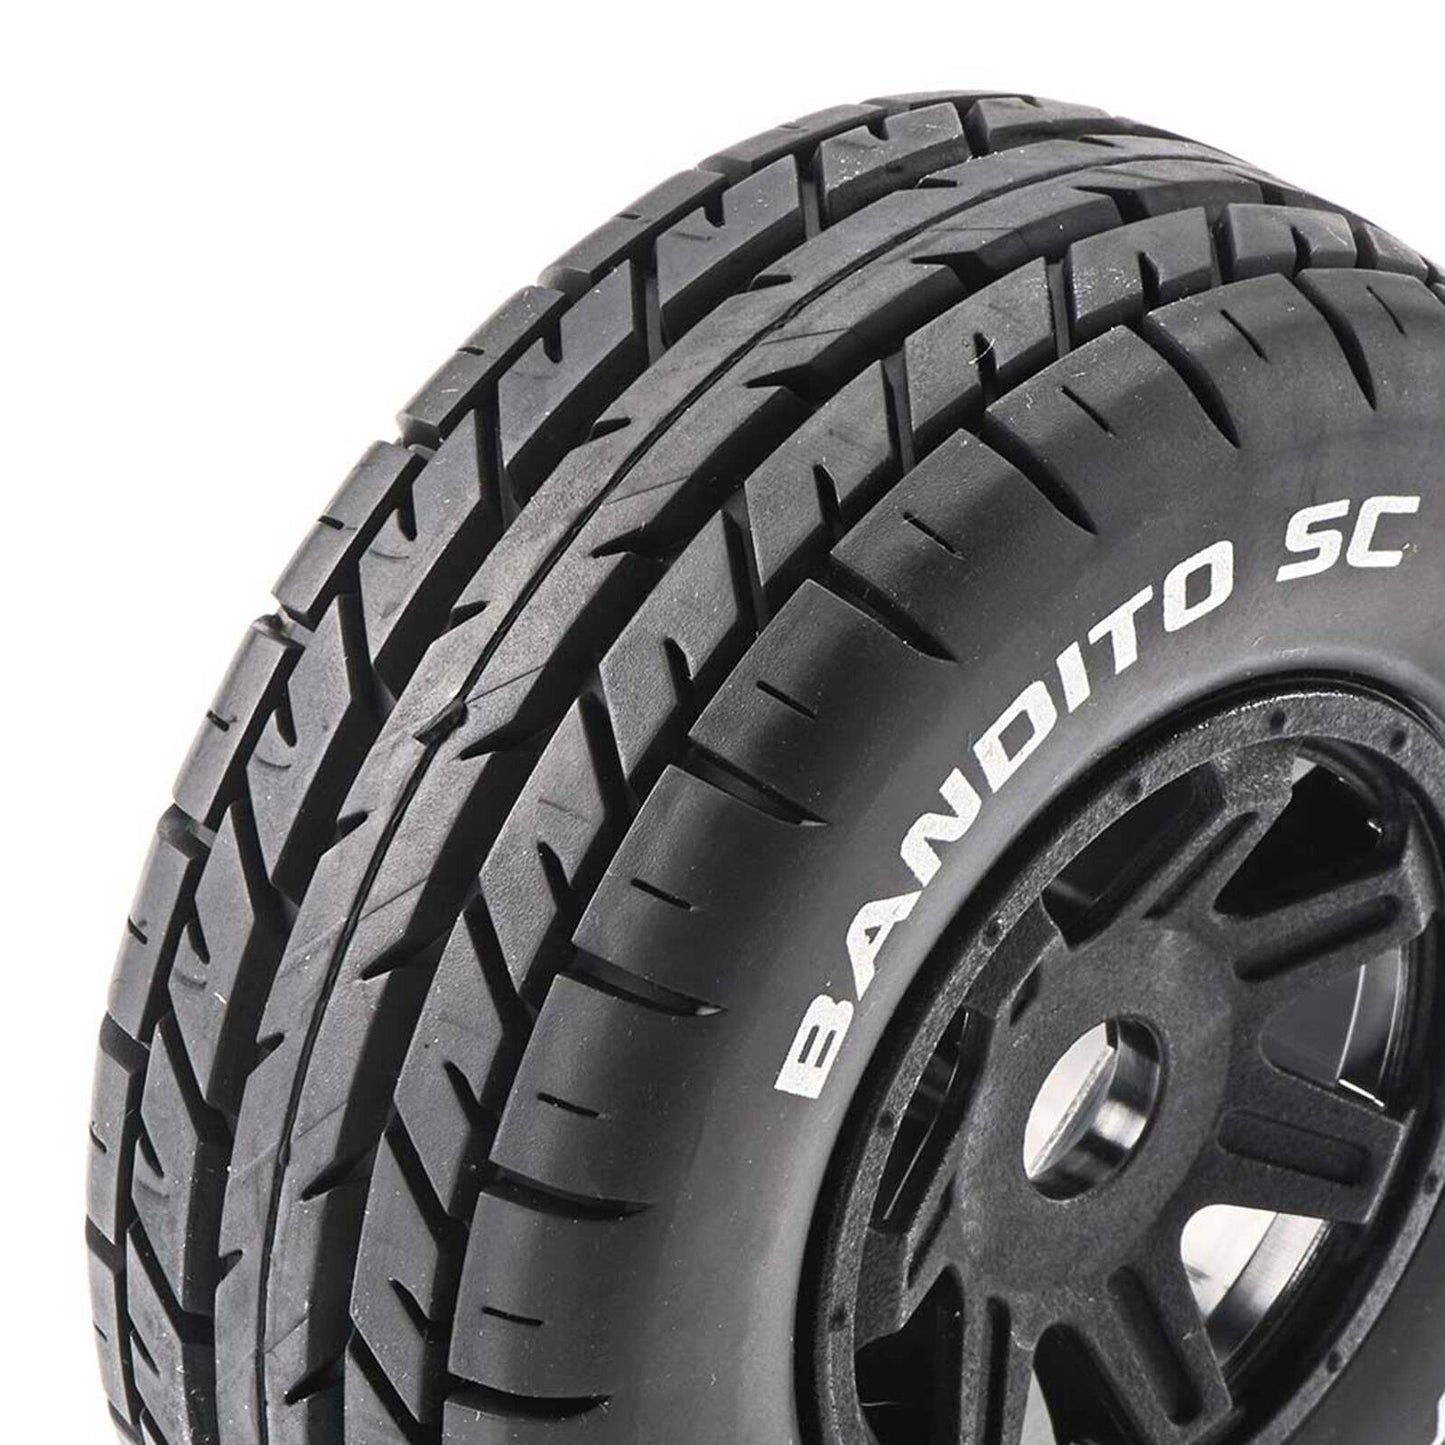 Duratrax DTXC5270 Bandito SC Mounted Soft Tires, Black 17mm Hex (2)